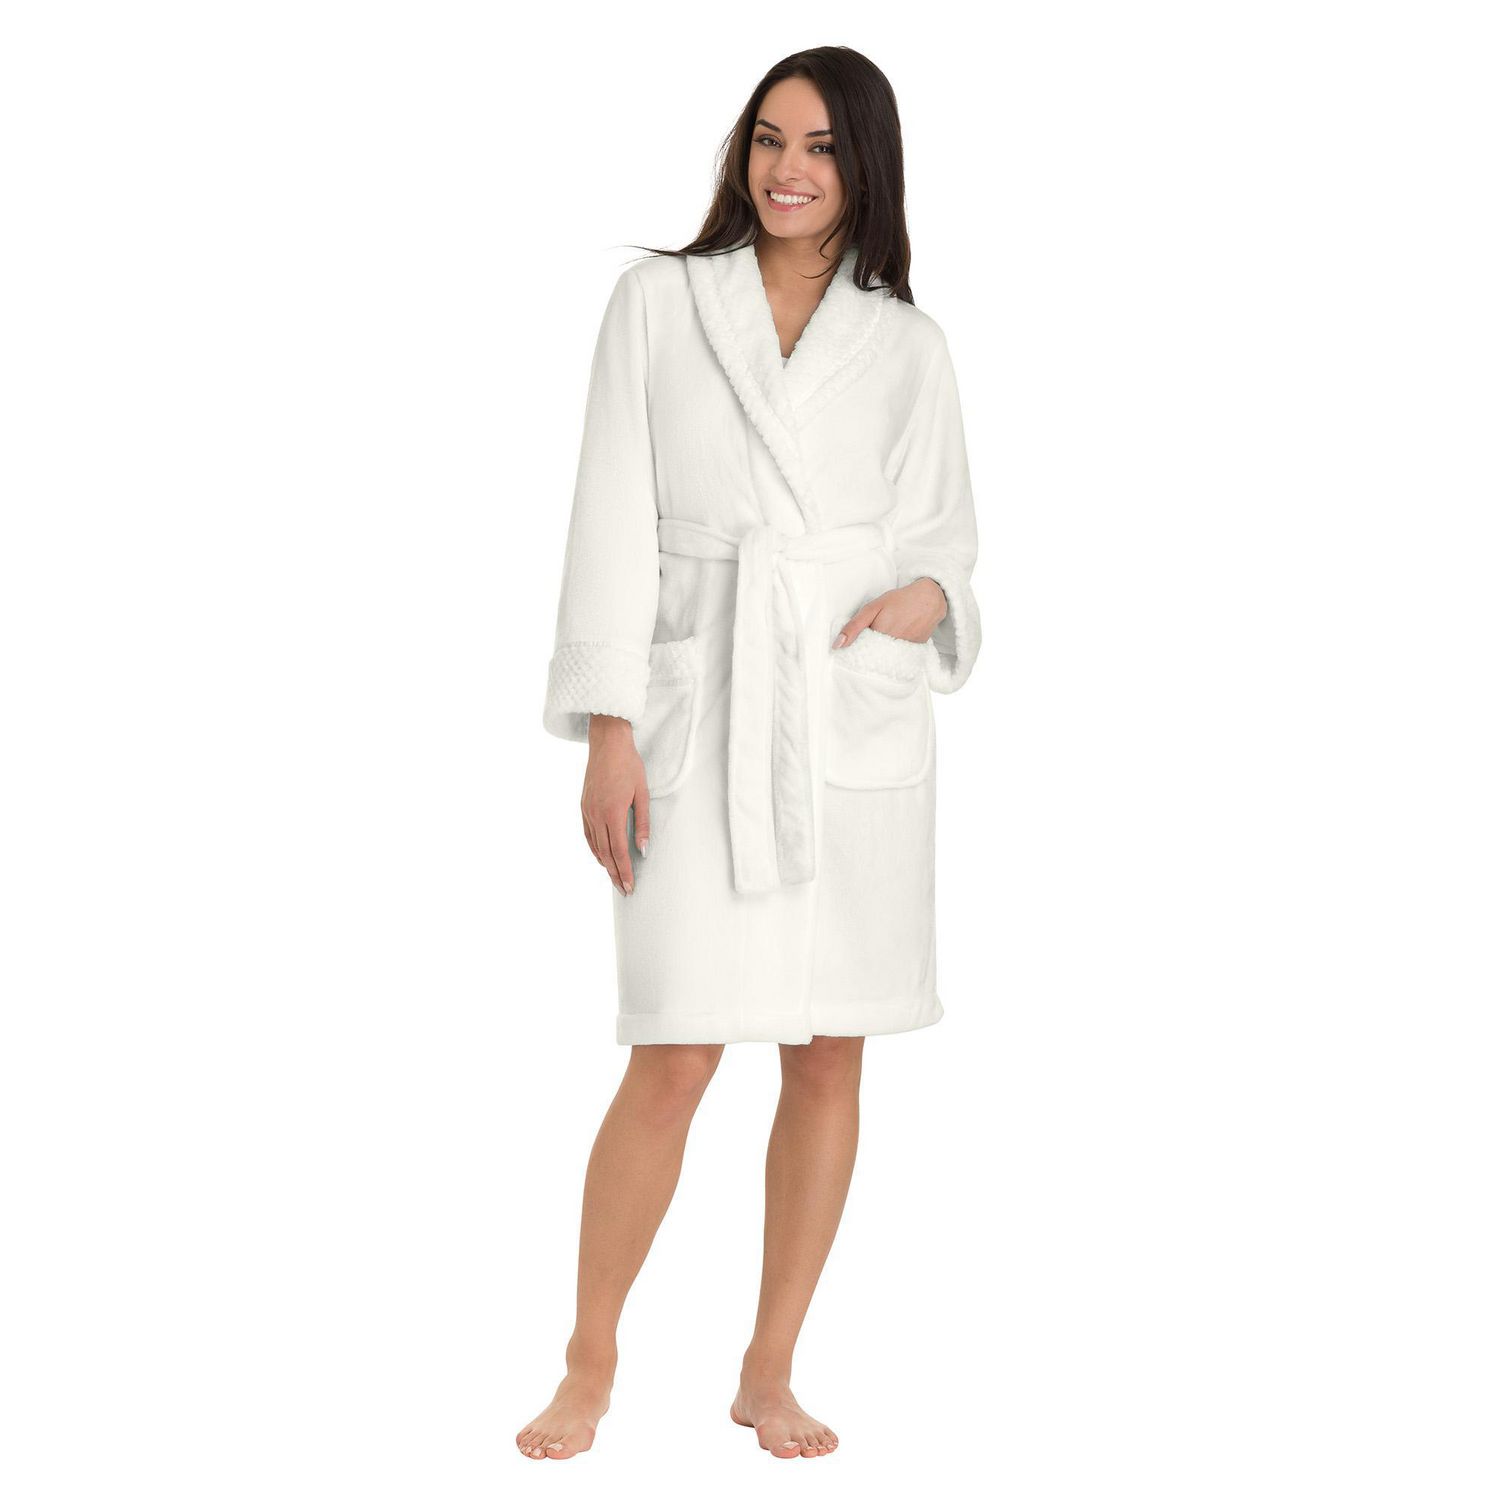 Safdie & Co. Bath Robe Solid Flannel S/M Off White | Walmart Canada